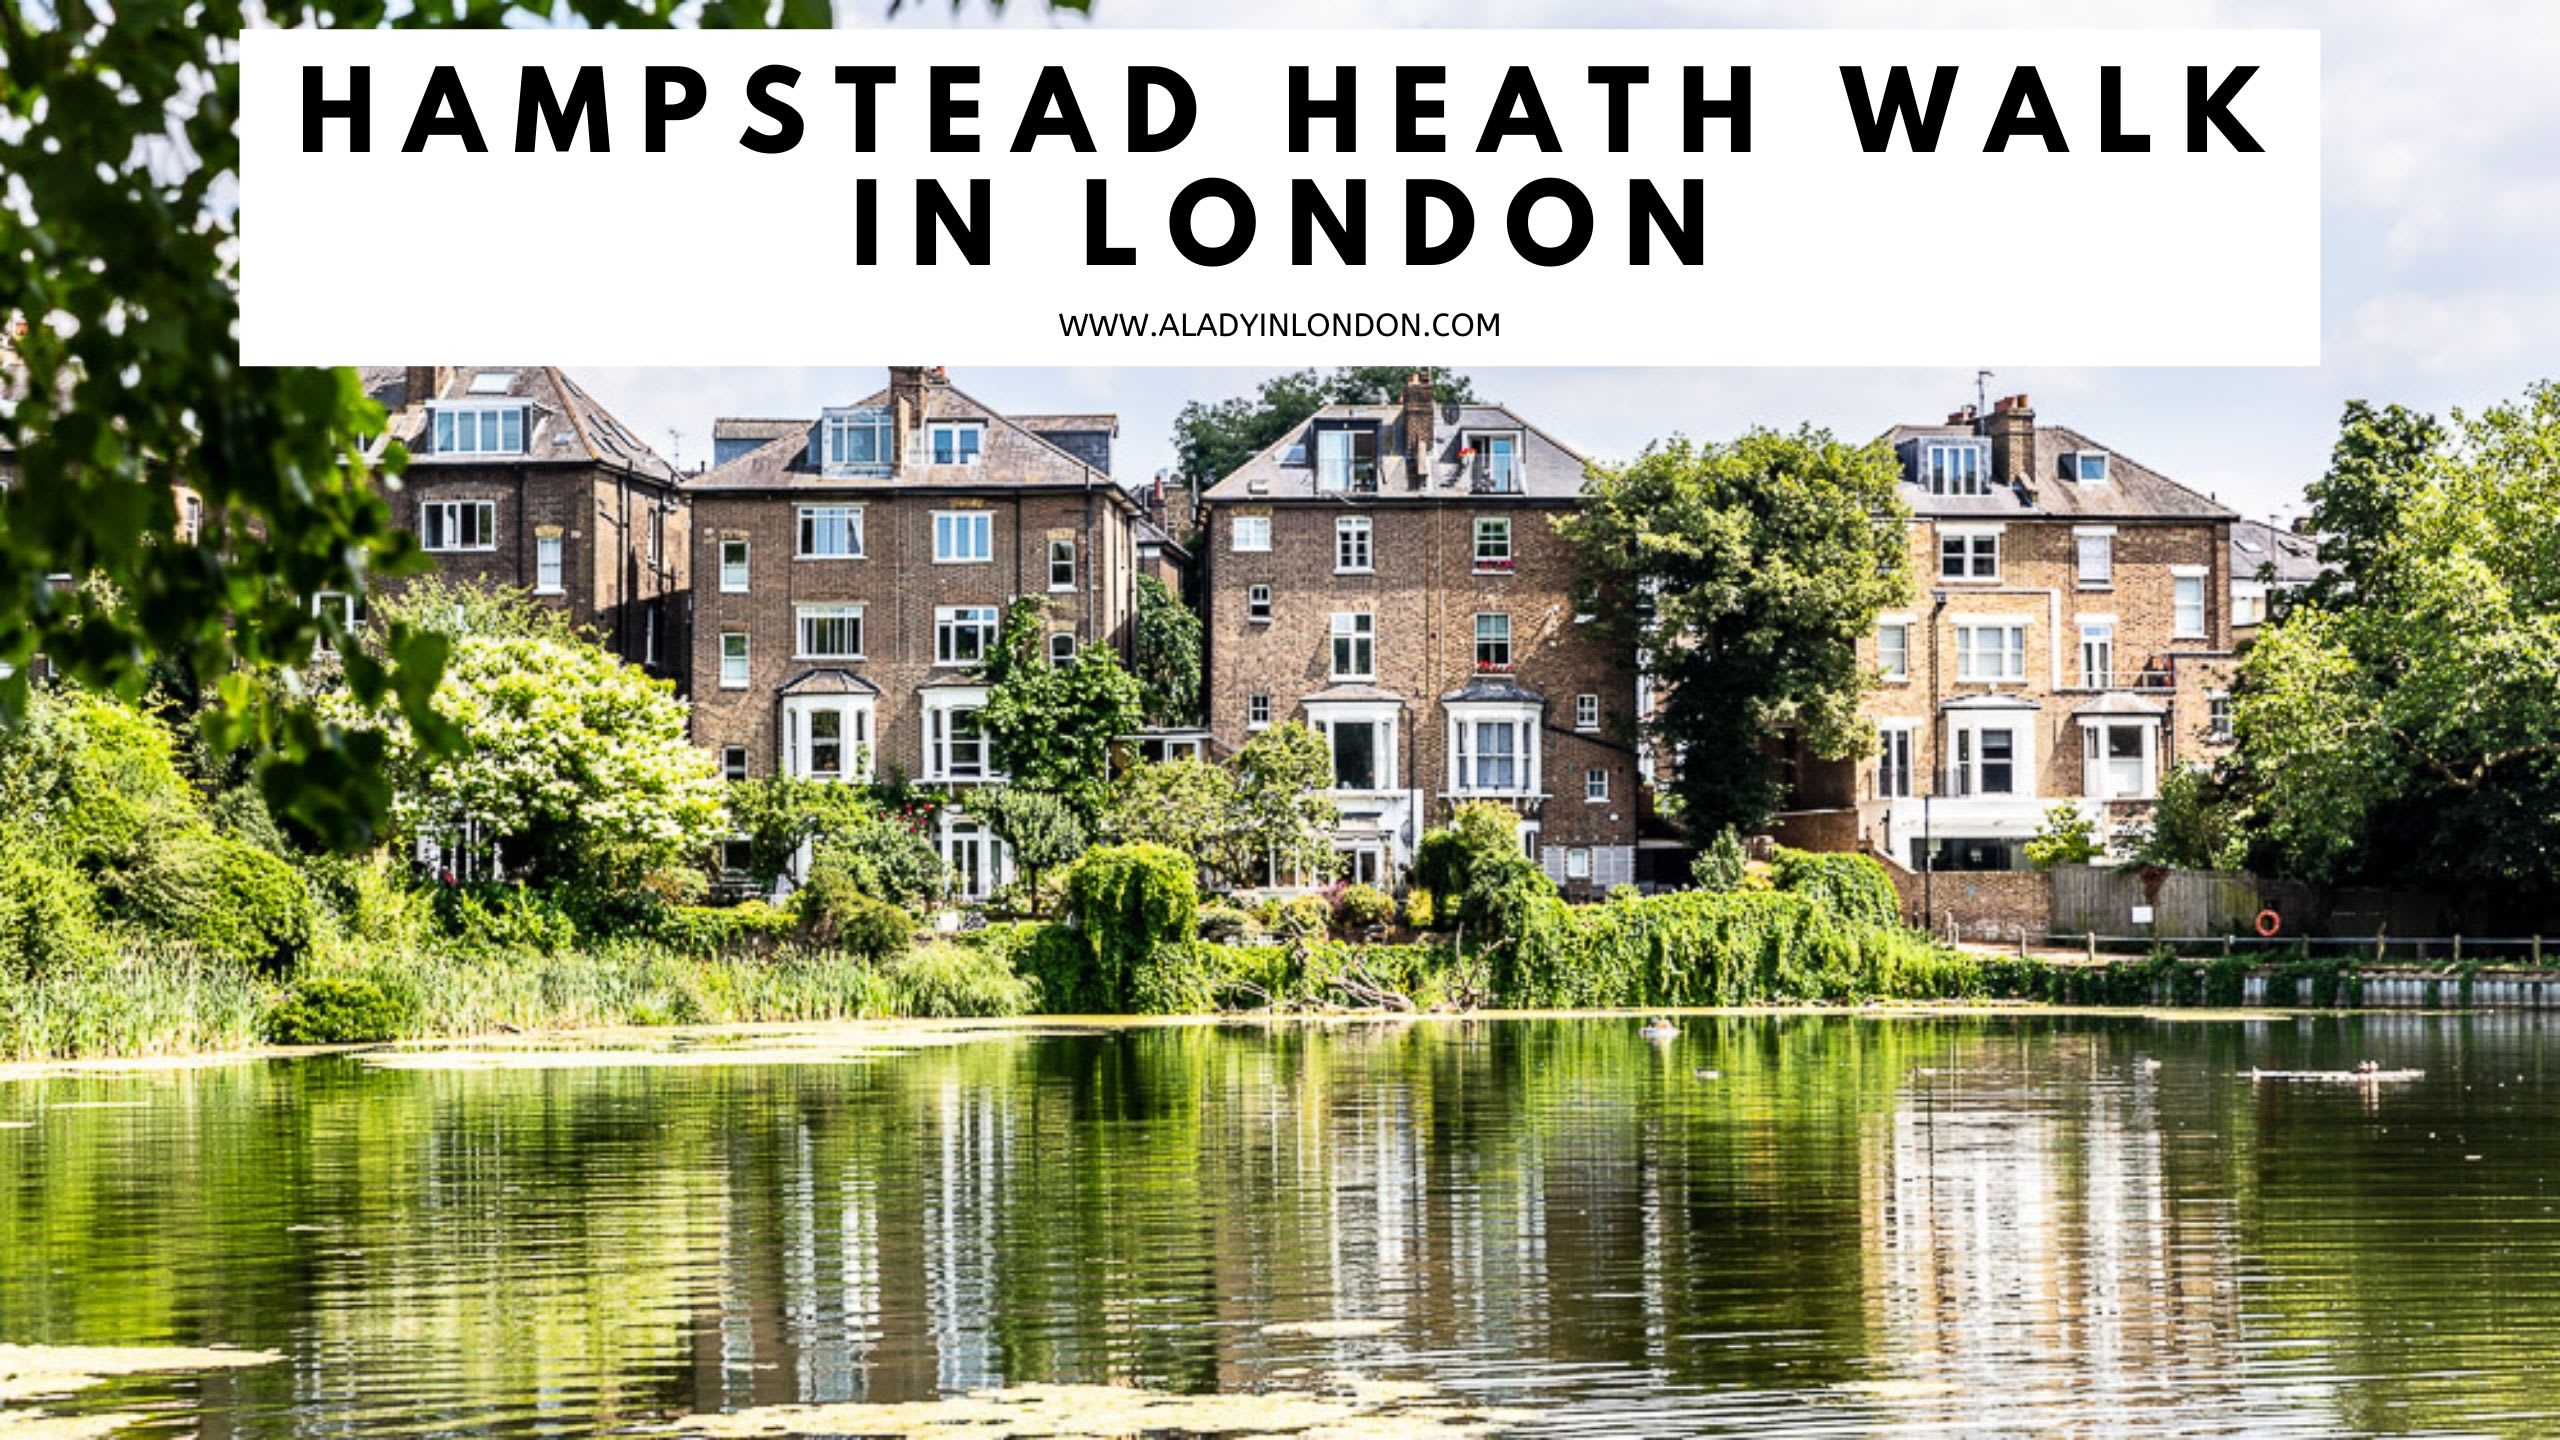 Hotel Gym vindruer 3 Hampstead Heath Walks in London - Free Self-Guided Walks with Maps